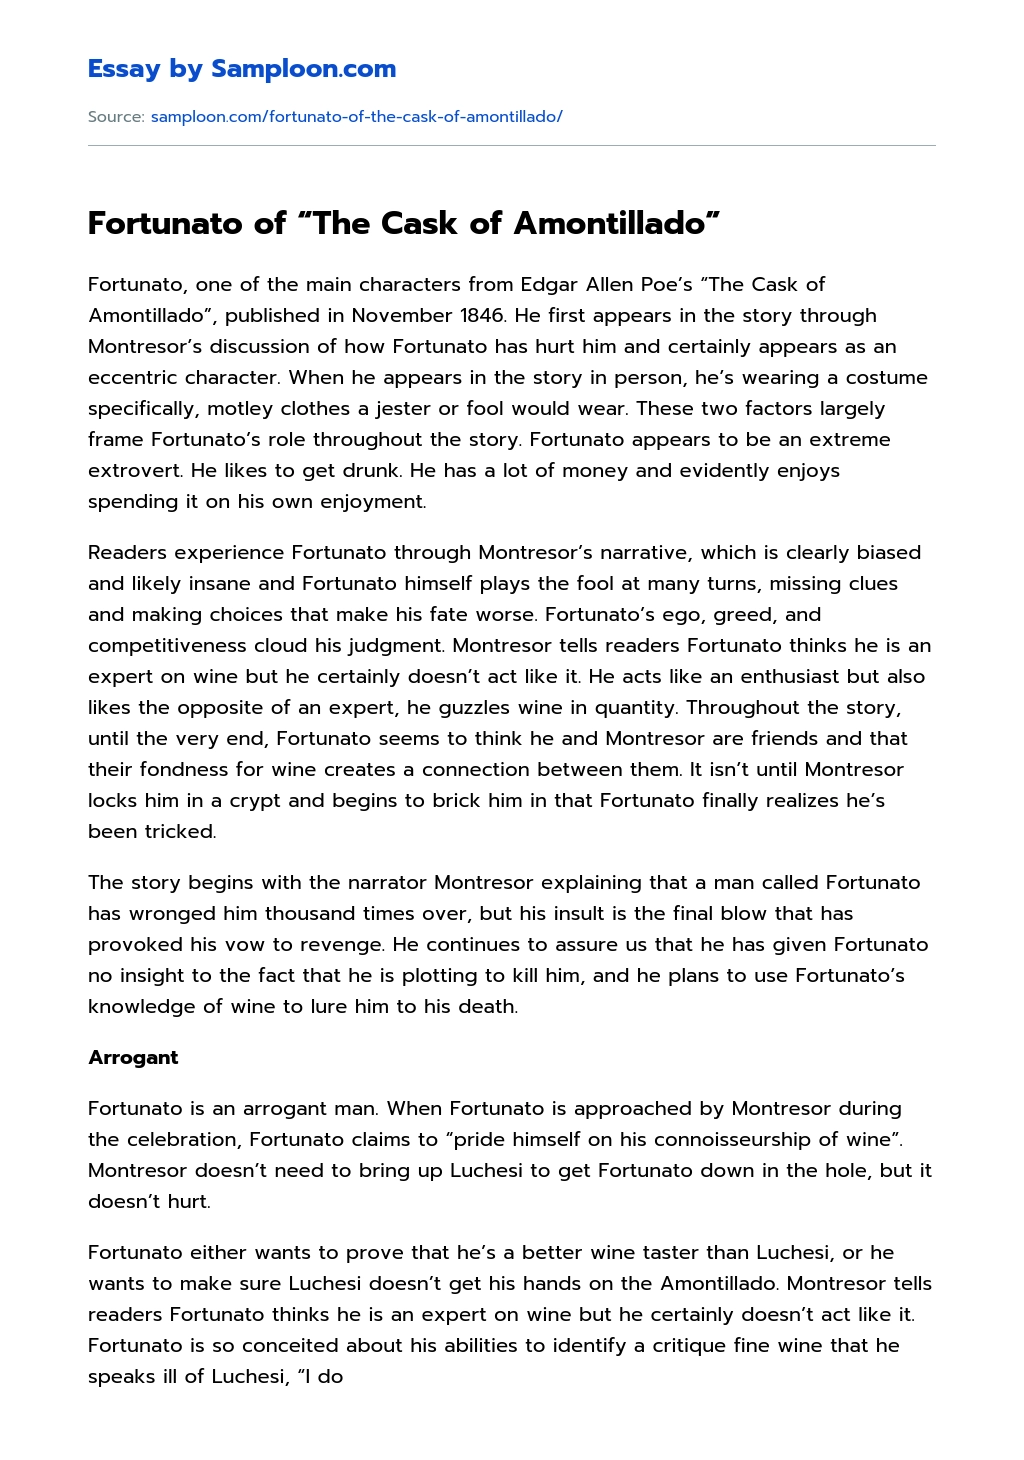 Fortunato of “The Cask of Amontillado” Analytical Essay essay